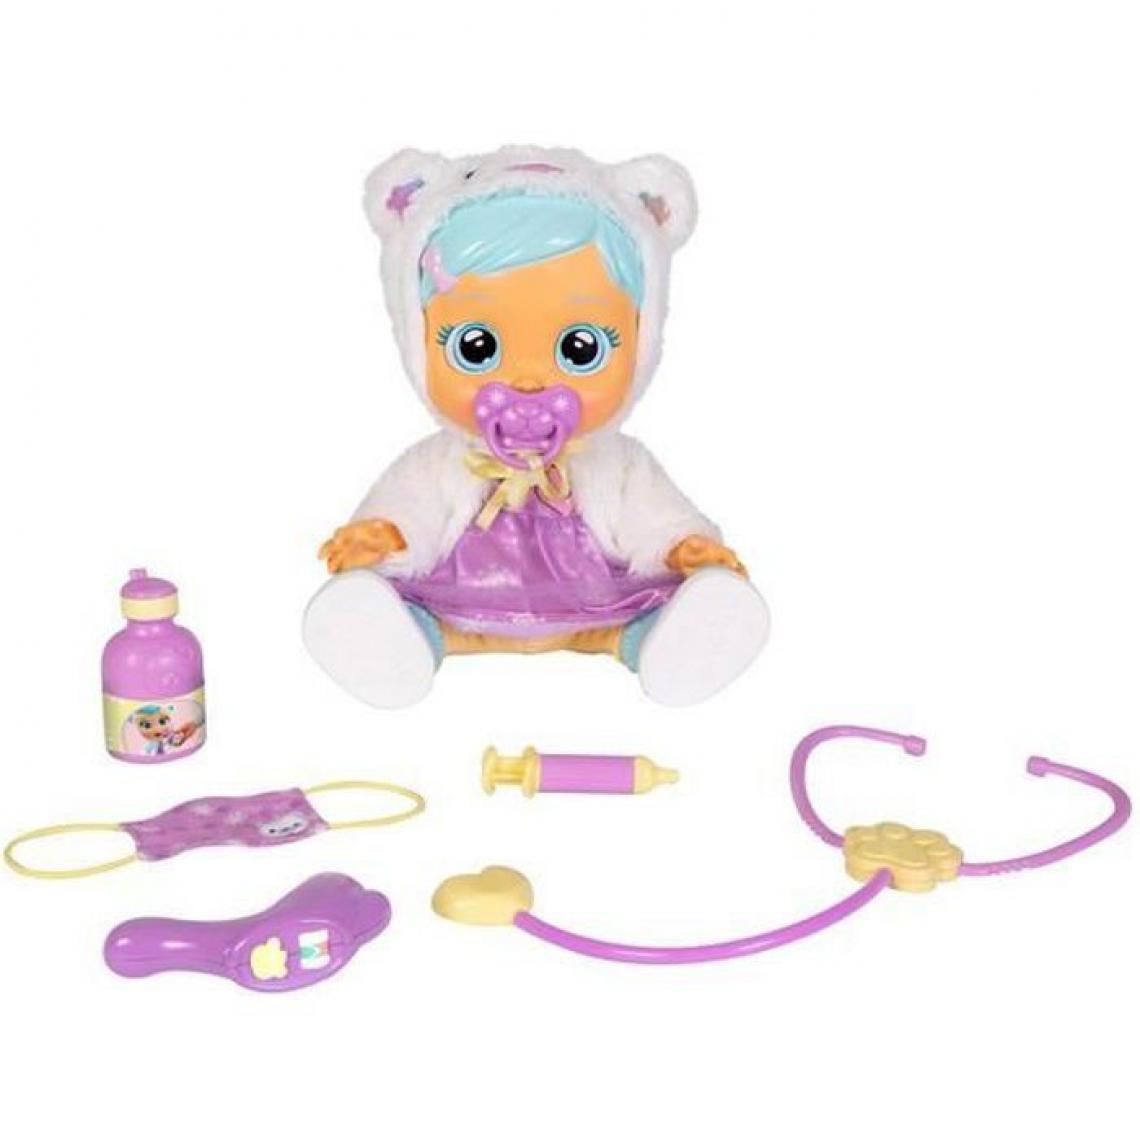 Imc Toys - IMC TOYS - Poupon malade Dressy - Cry Babies Kristal - Poupons